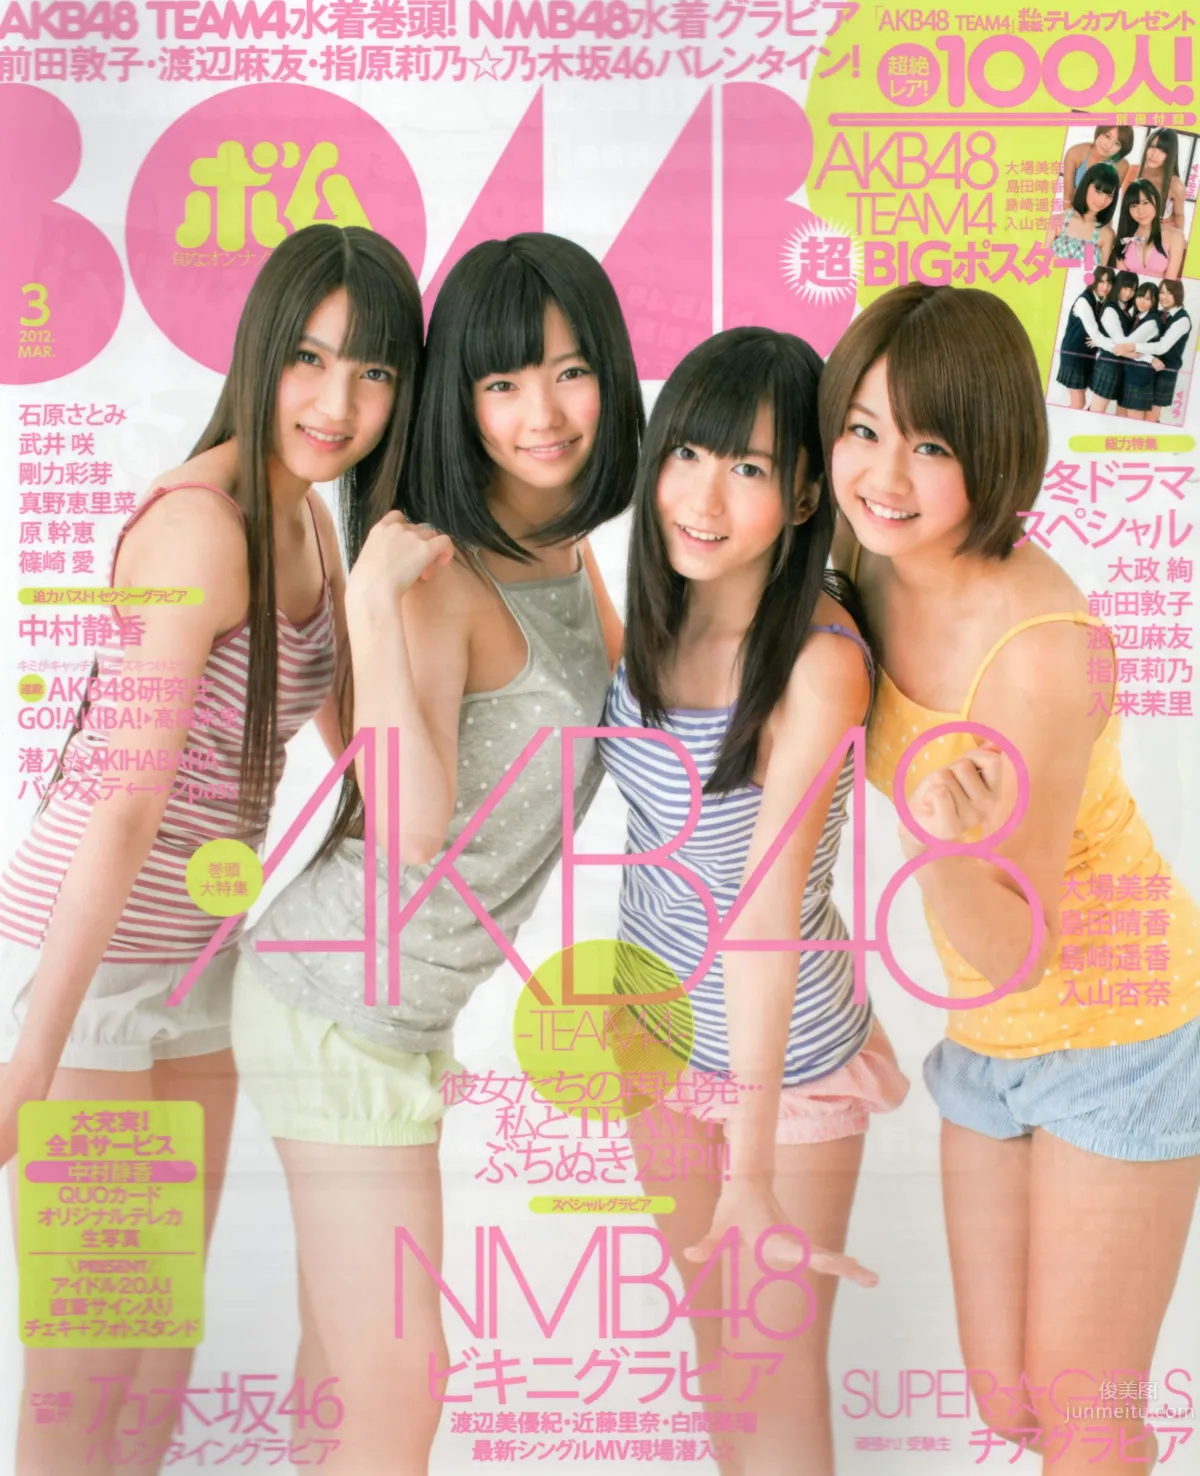 [Bomb Magazine] 2012 No.03 AKB48(Team4) NMB48 前田敦子 渡邊麻友 SUPER☆GiRLS 石原里美 剛力彩芽 篠崎愛_0